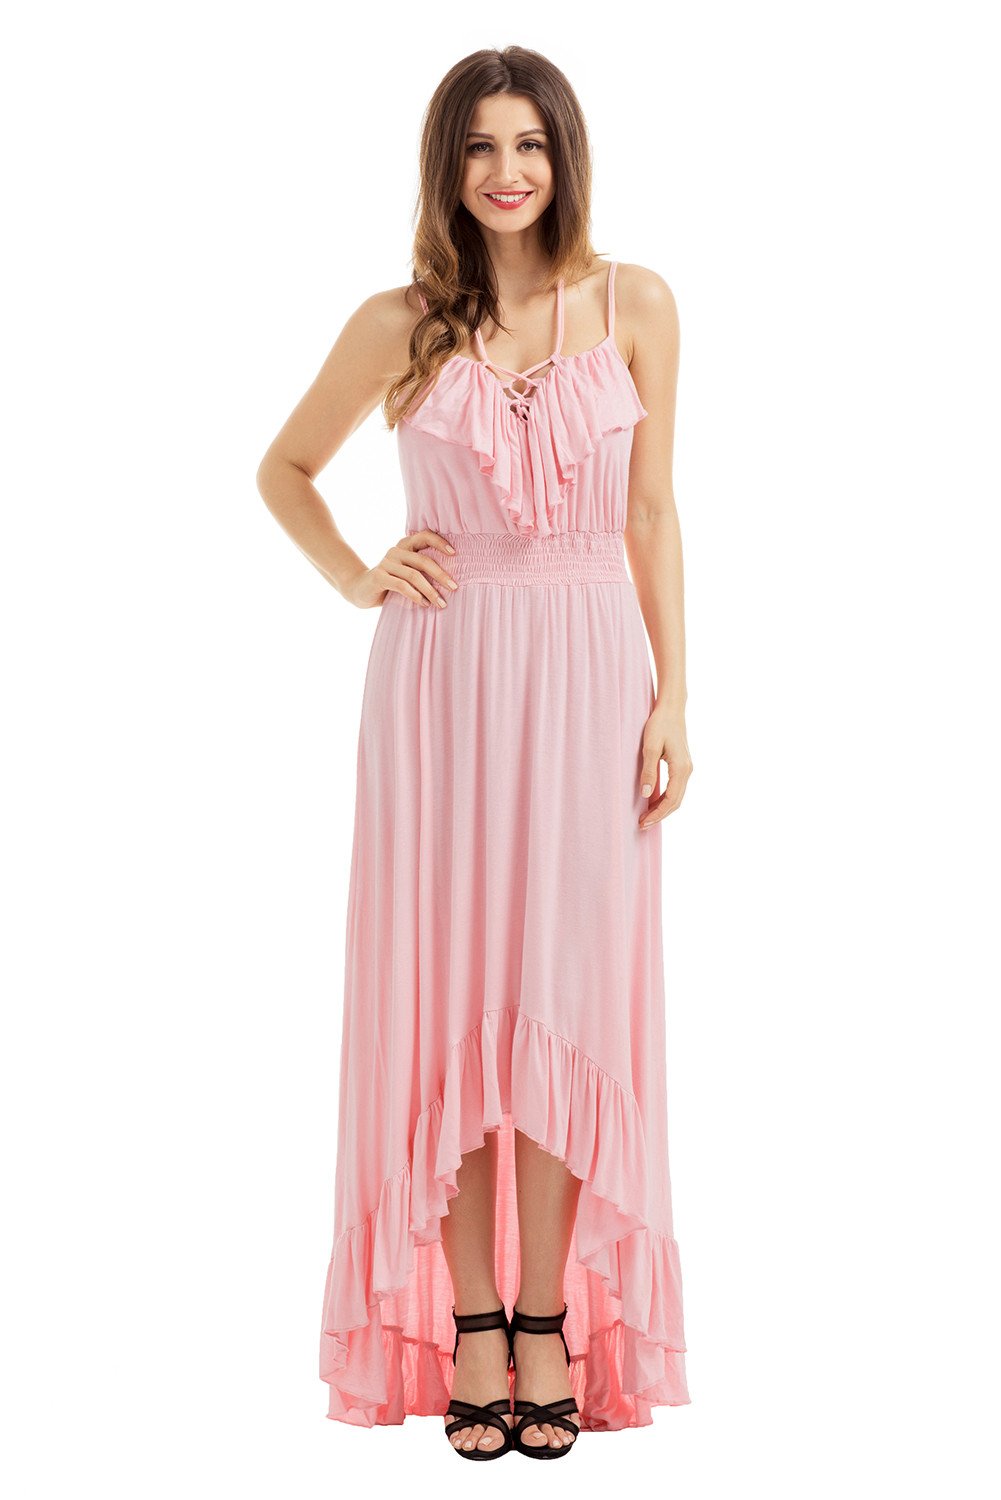 JuliaFashion-Light Pink Lace Up V Neck Ruffle Trim High-low Maxi Dress